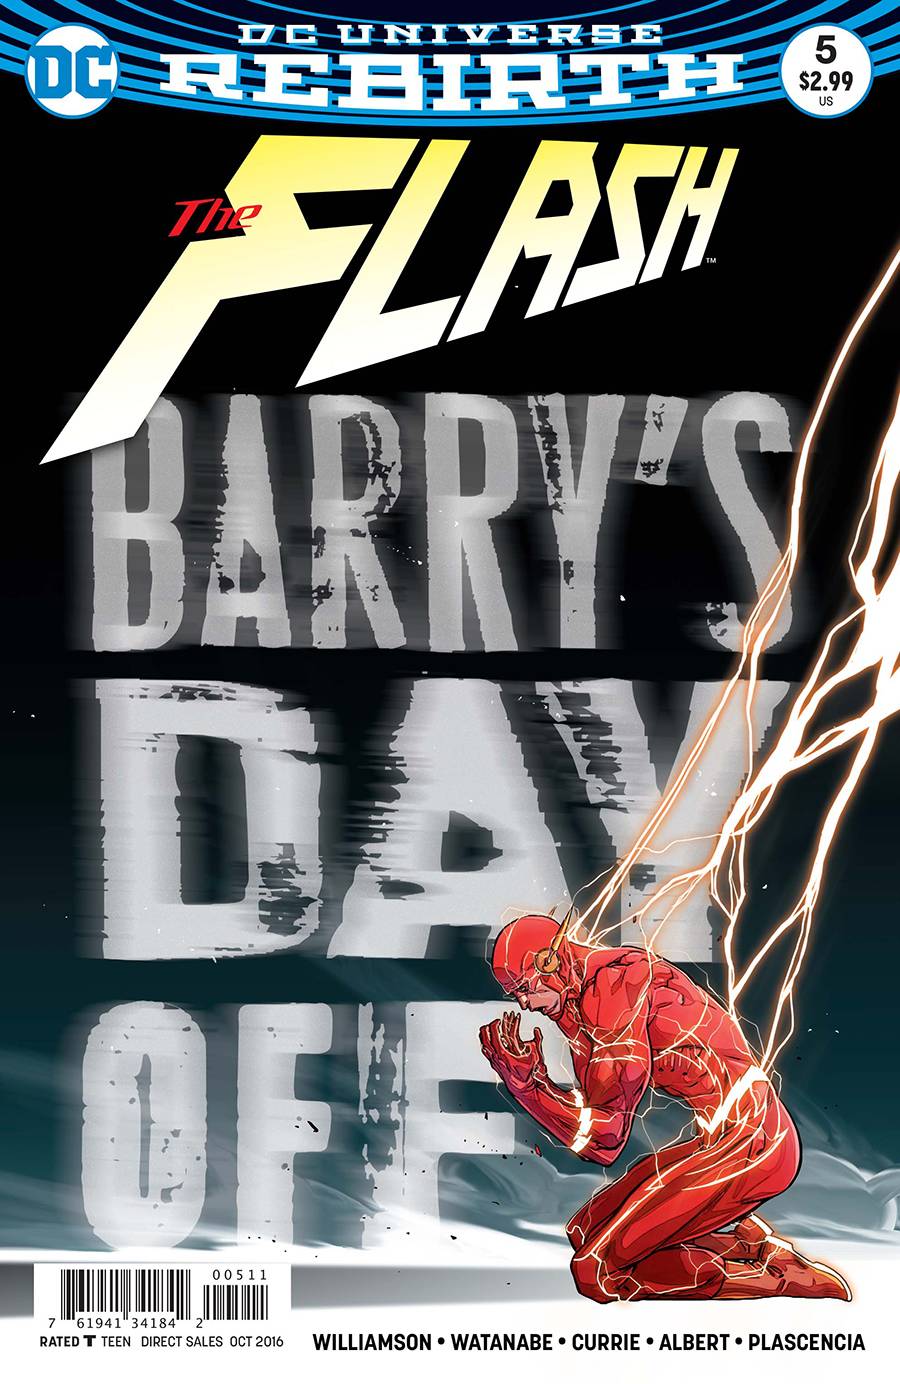 Flash #5 (DC Universe Rebirth) (1st full appearance of Godspeed)